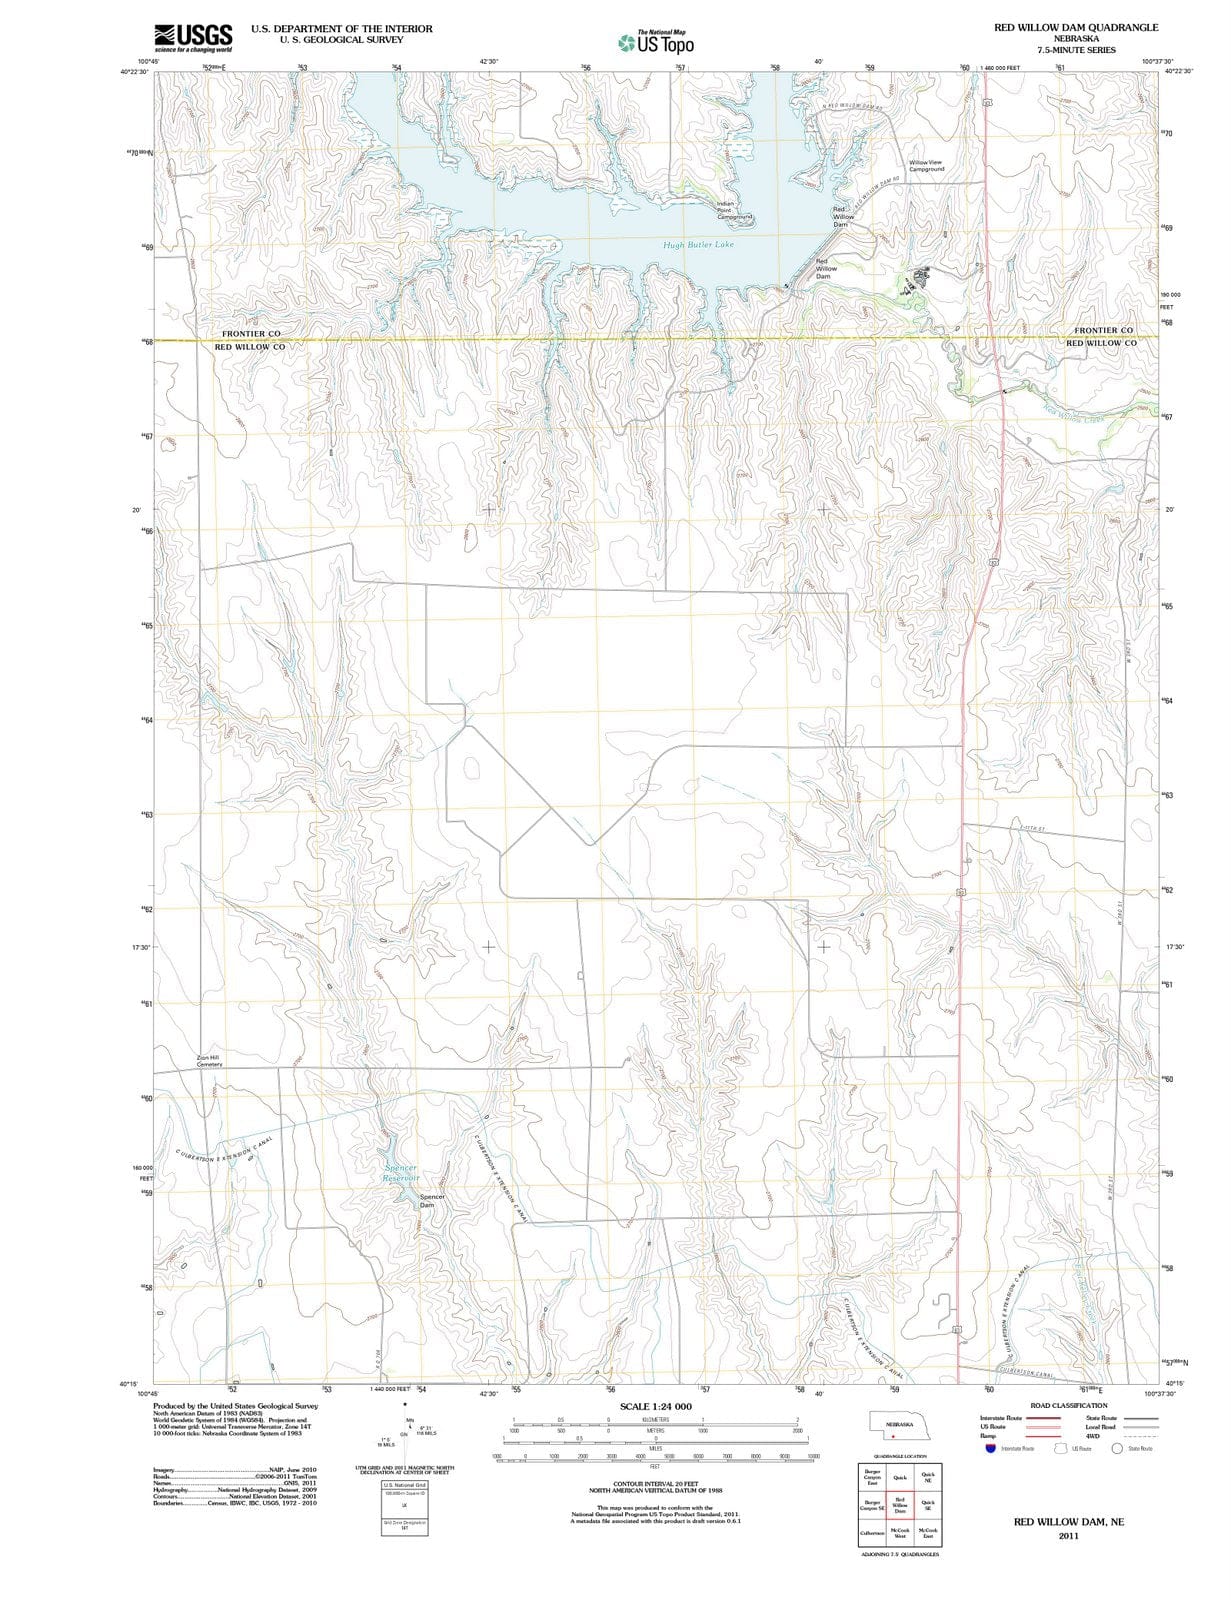 2011 Red Willowam, NE - Nebraska - USGS Topographic Map